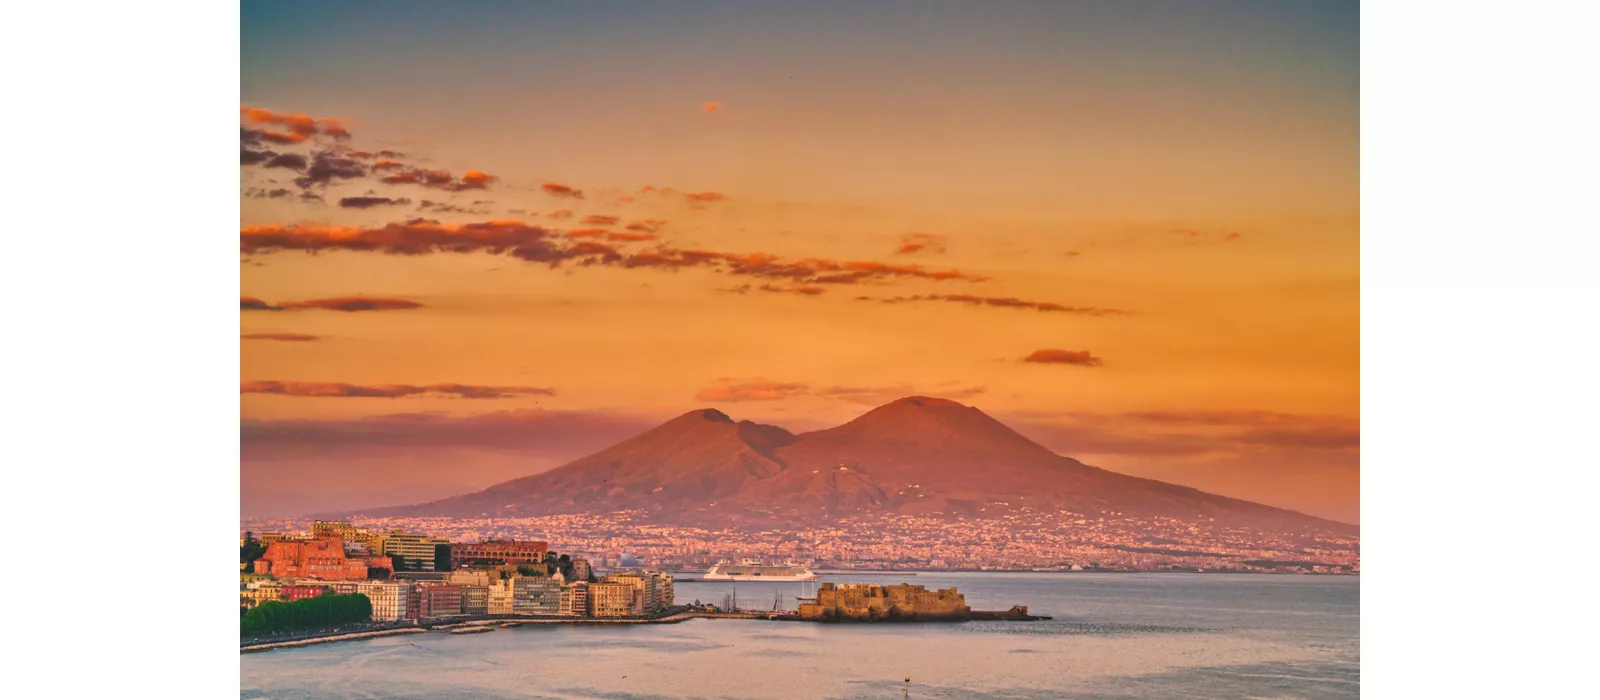 View of Mount Vesuvius at sunset